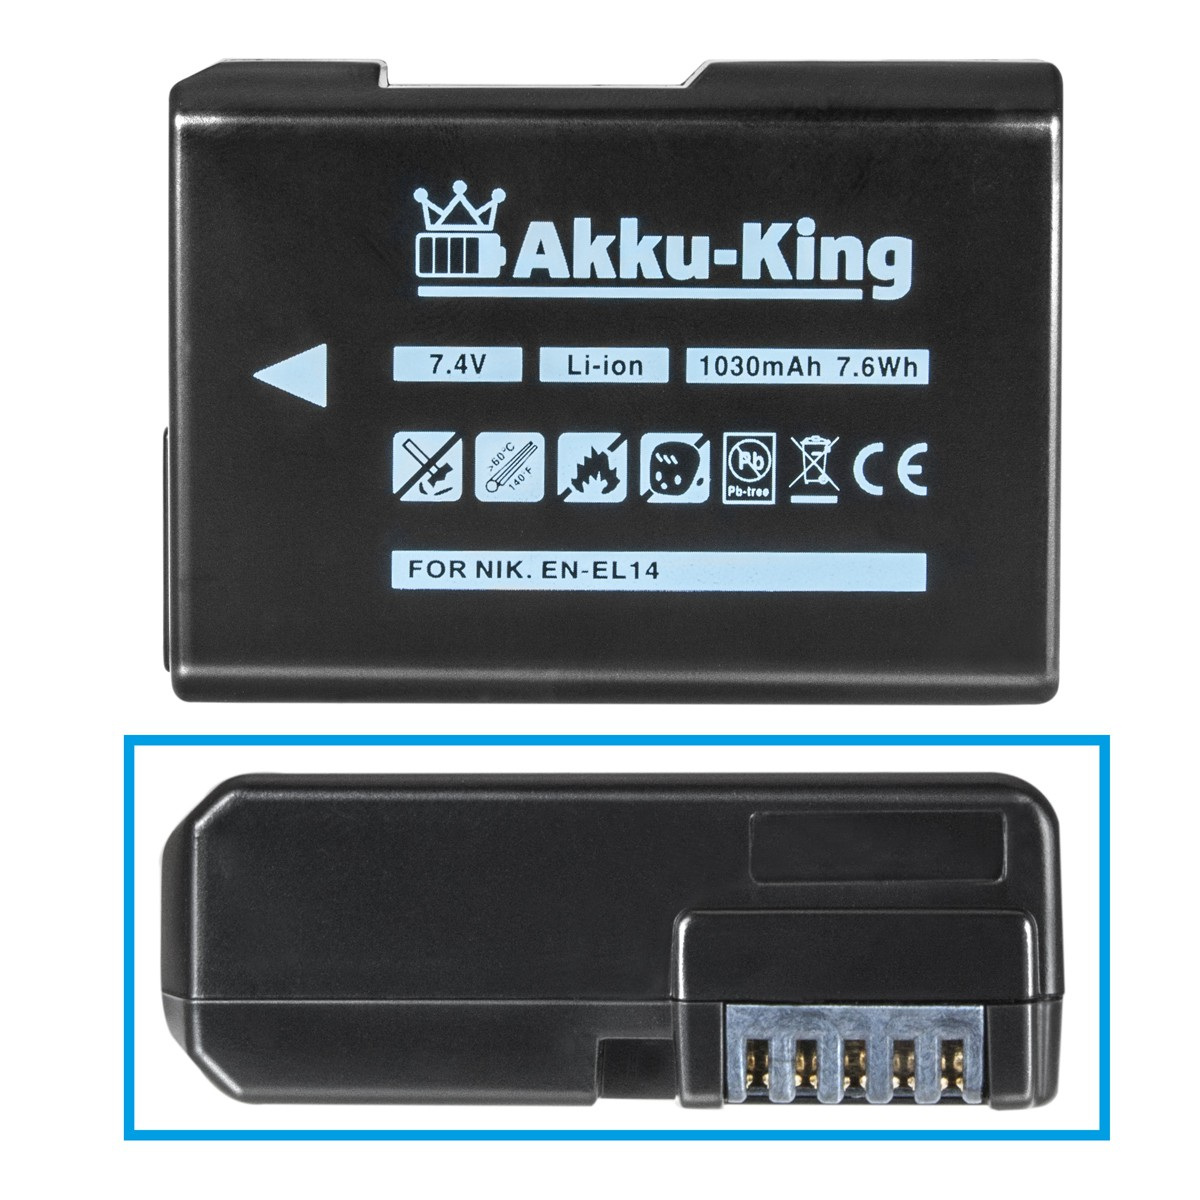 kompatibel Li-Ion EN-EL14 7.4 AKKU-KING Akku Nikon 1030mAh mit Volt, Kamera-Akku,